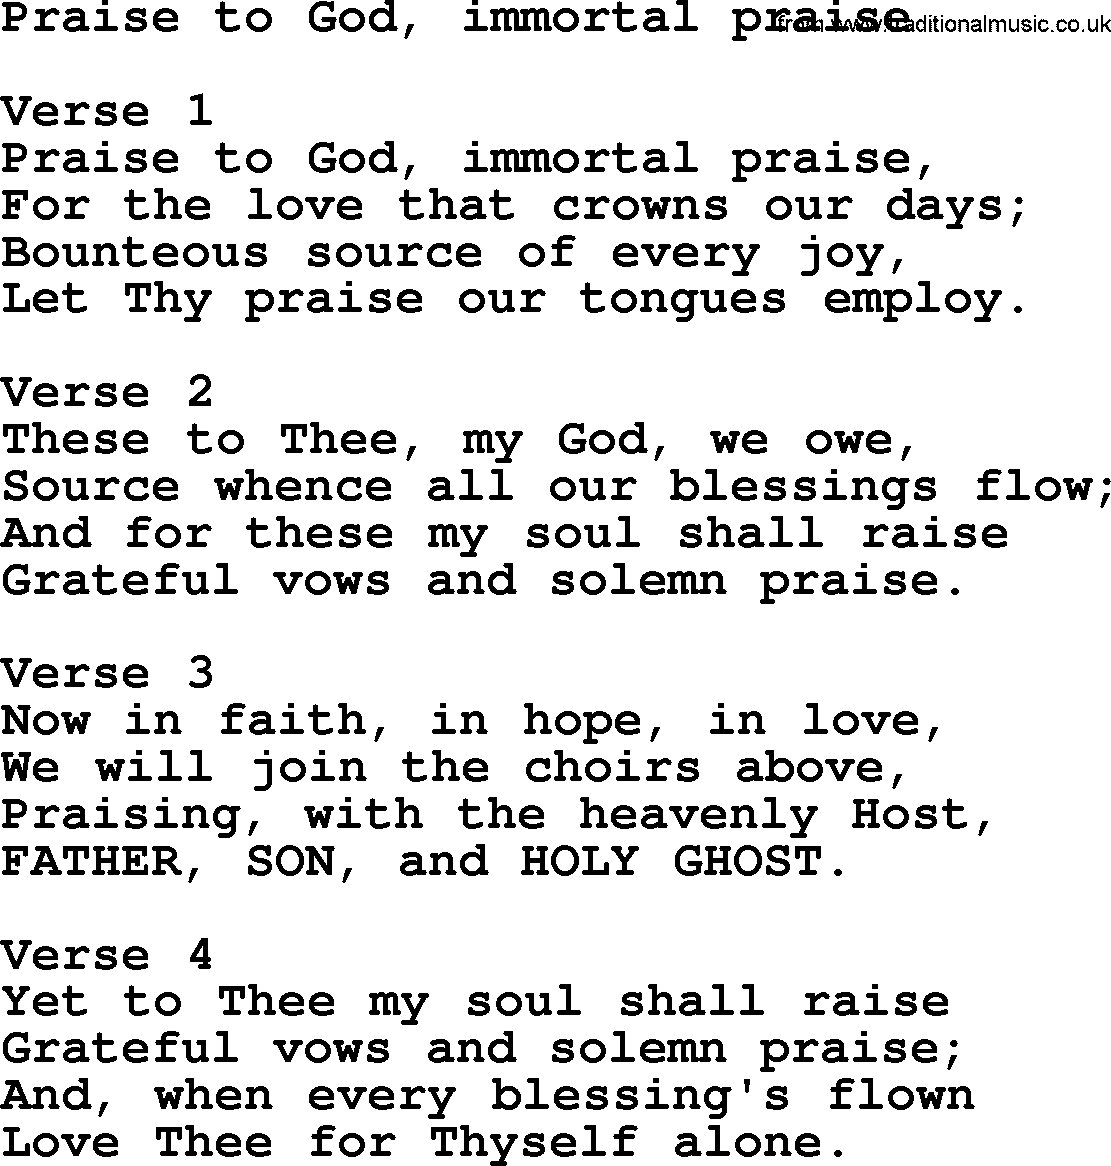 Apostolic and Pentecostal Hymns and Gospel Songs, Hymn: Praise To God, Immortal Praise, Christian lyrics and PDF